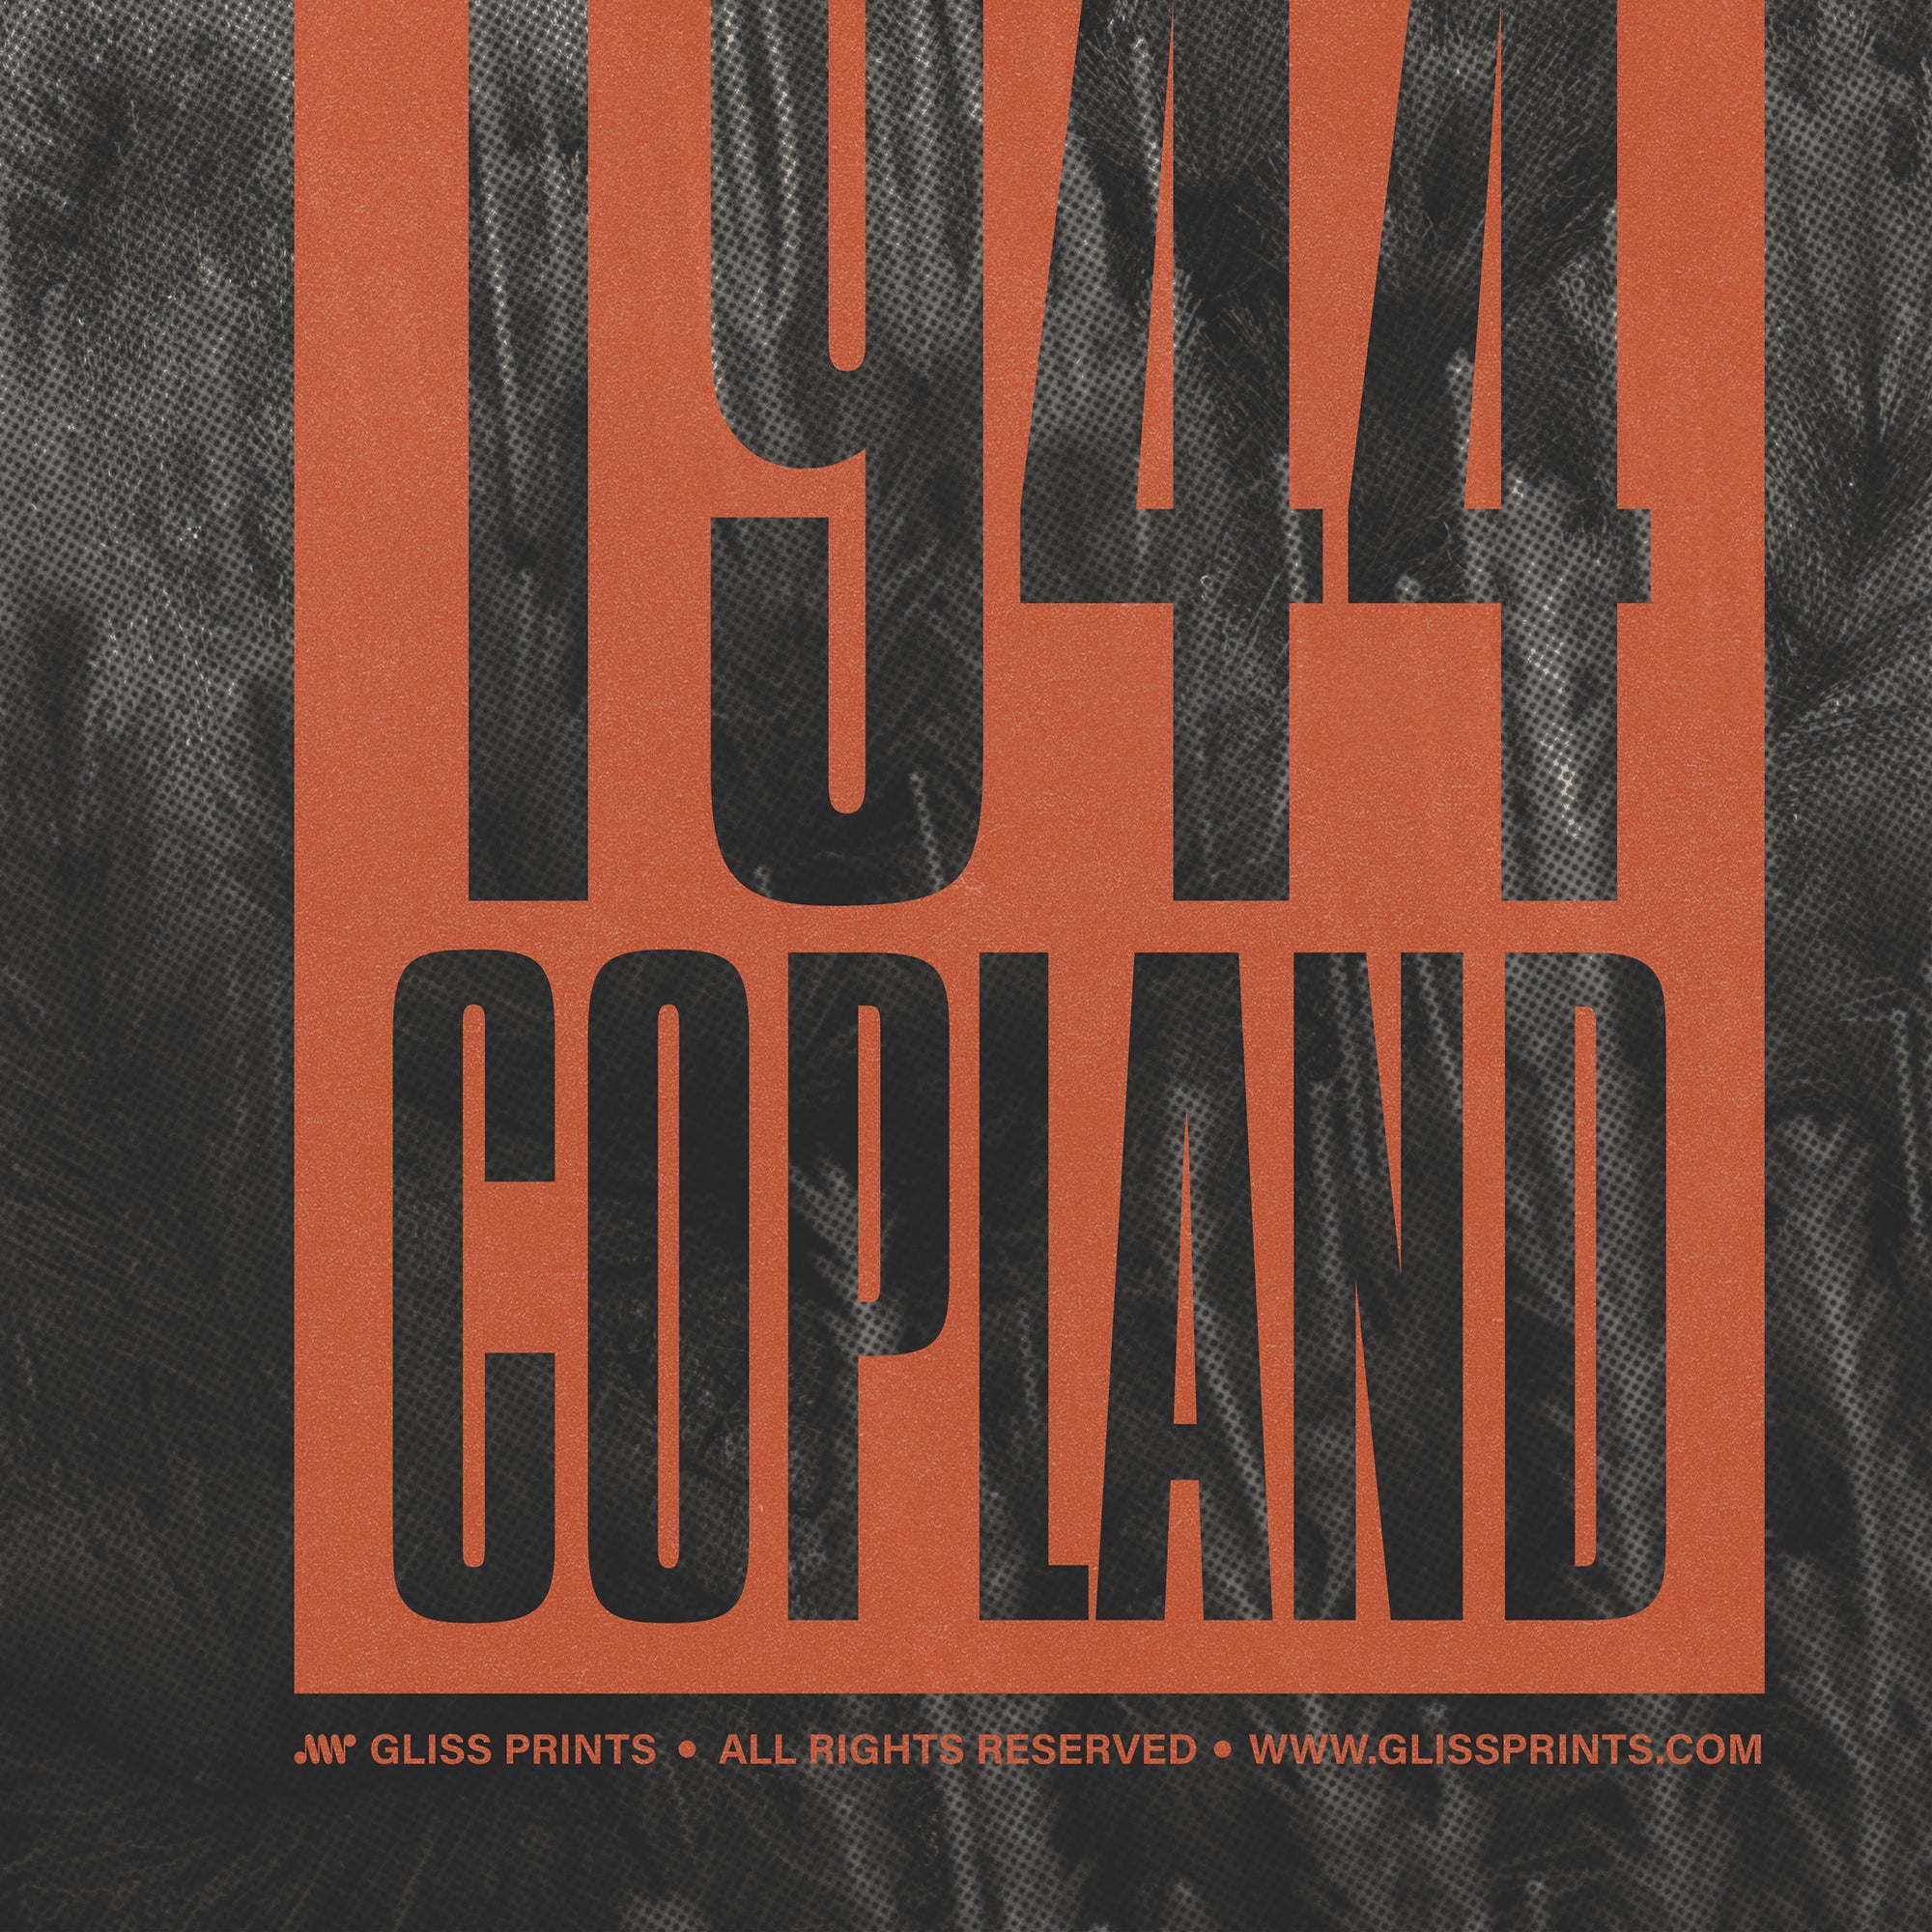 Aaron Copland Appalachian Spring Concert Poster